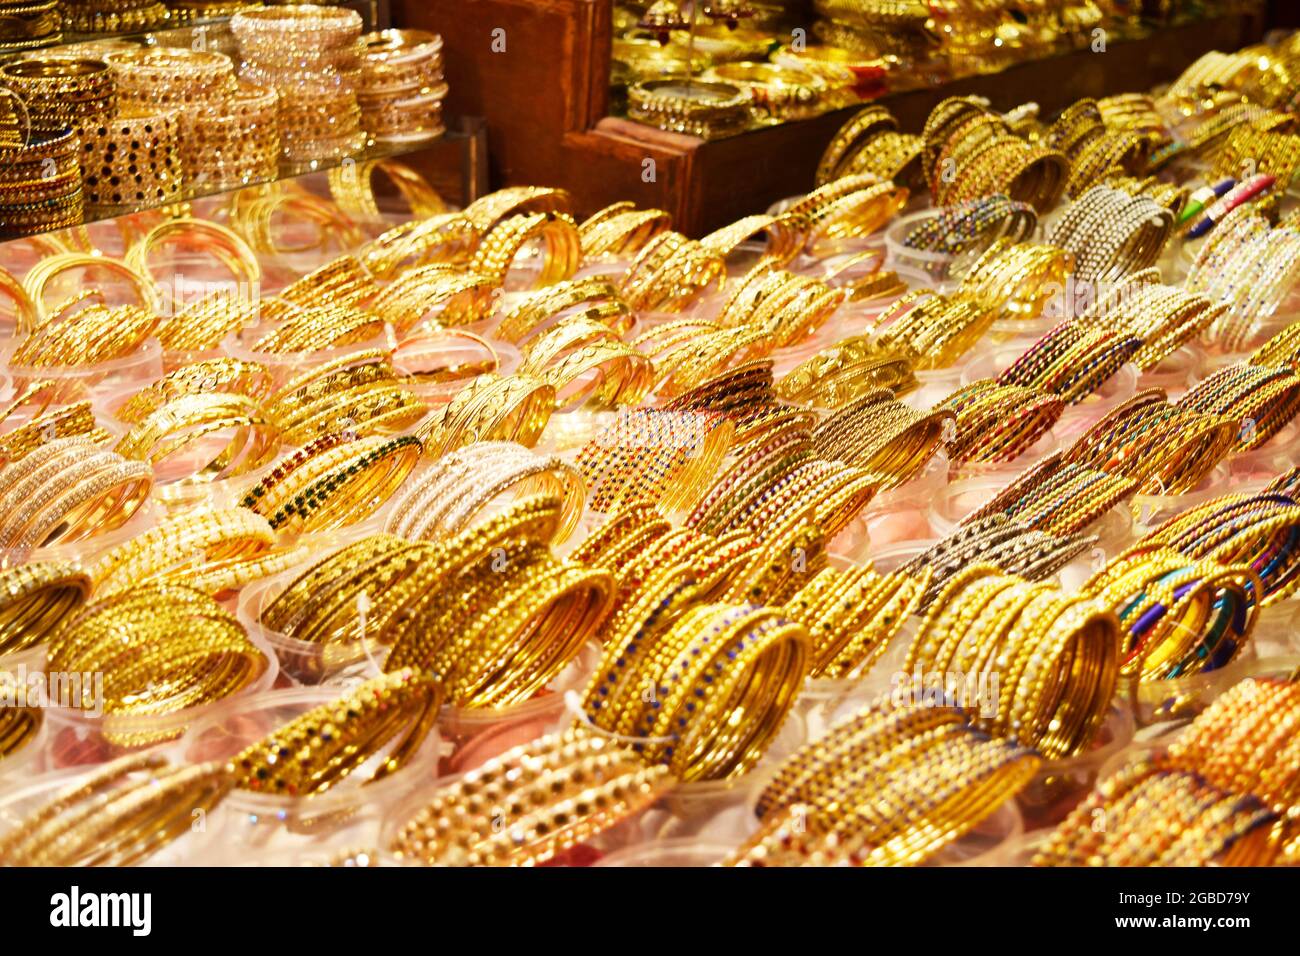 gold market, jewellery market in dubai, gold bangles shopping Stock Photo